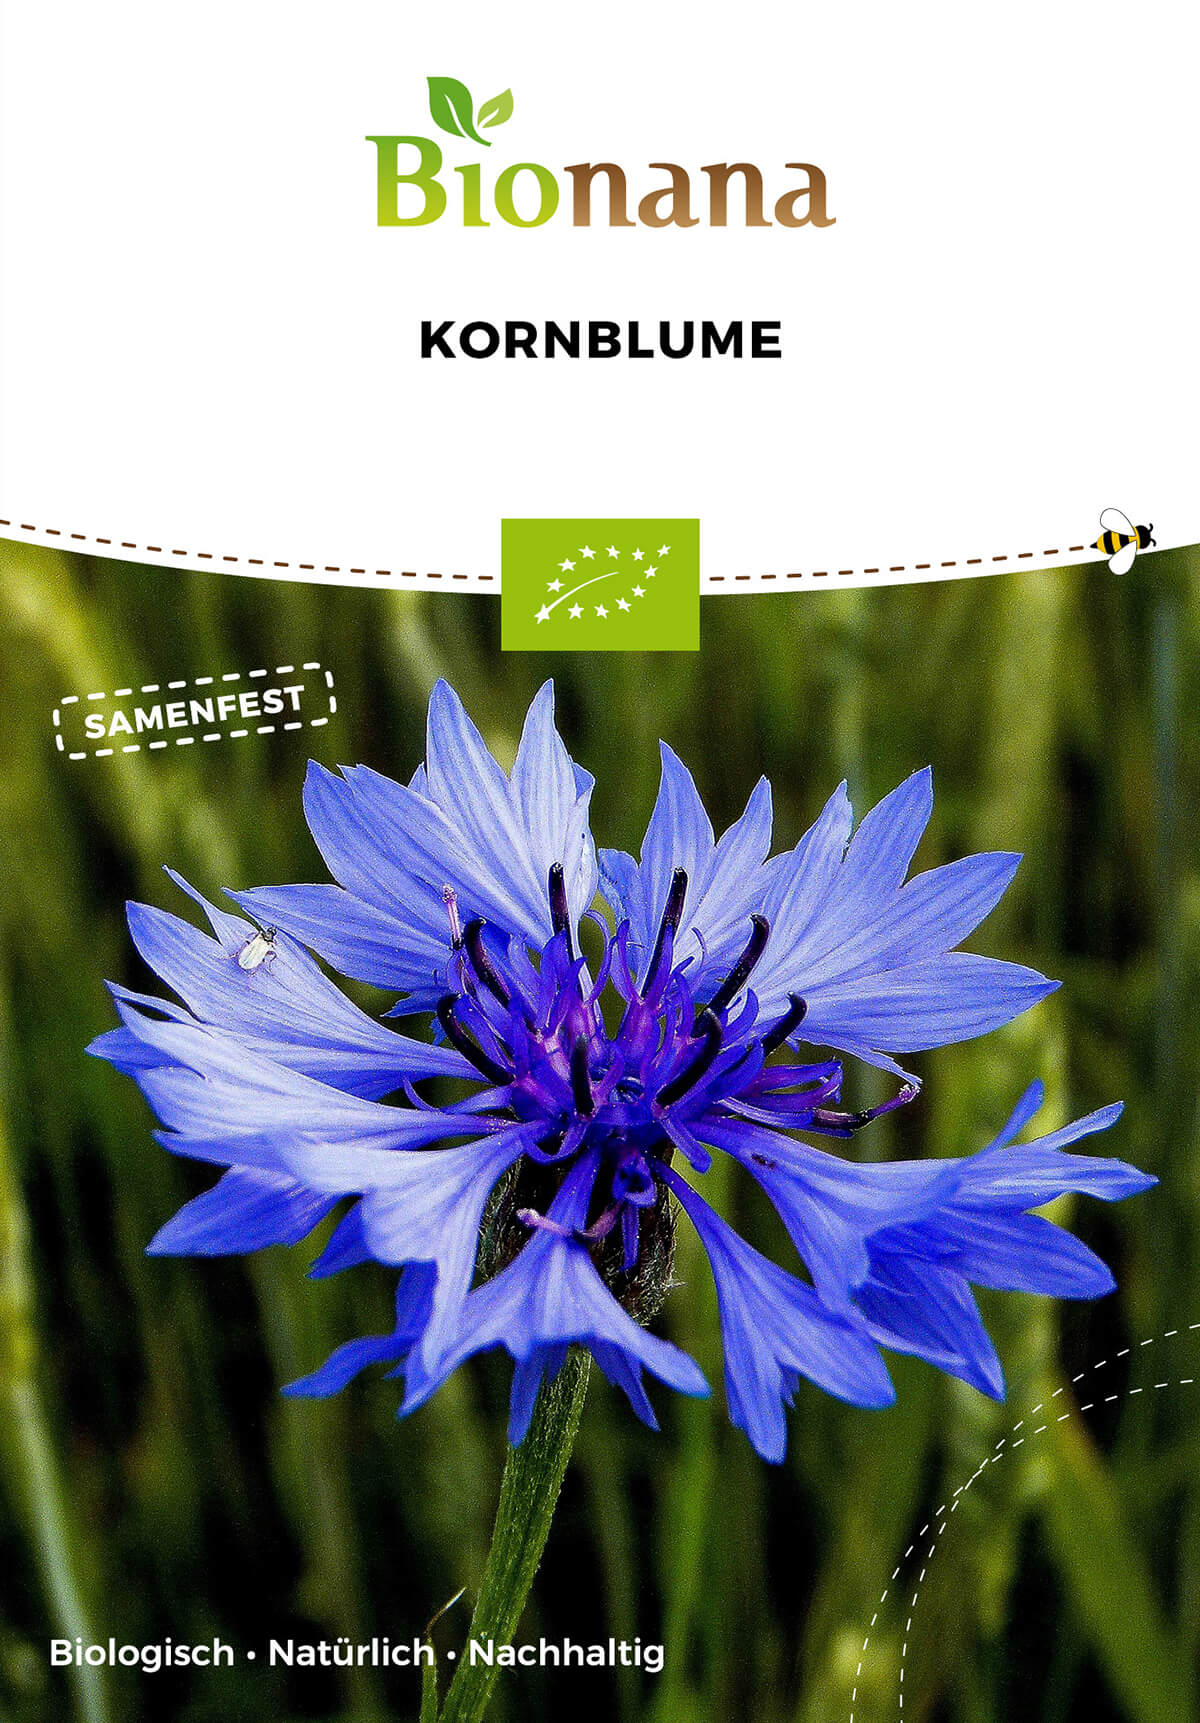 Kornblume | BIO Kornblumensamen von Bionana